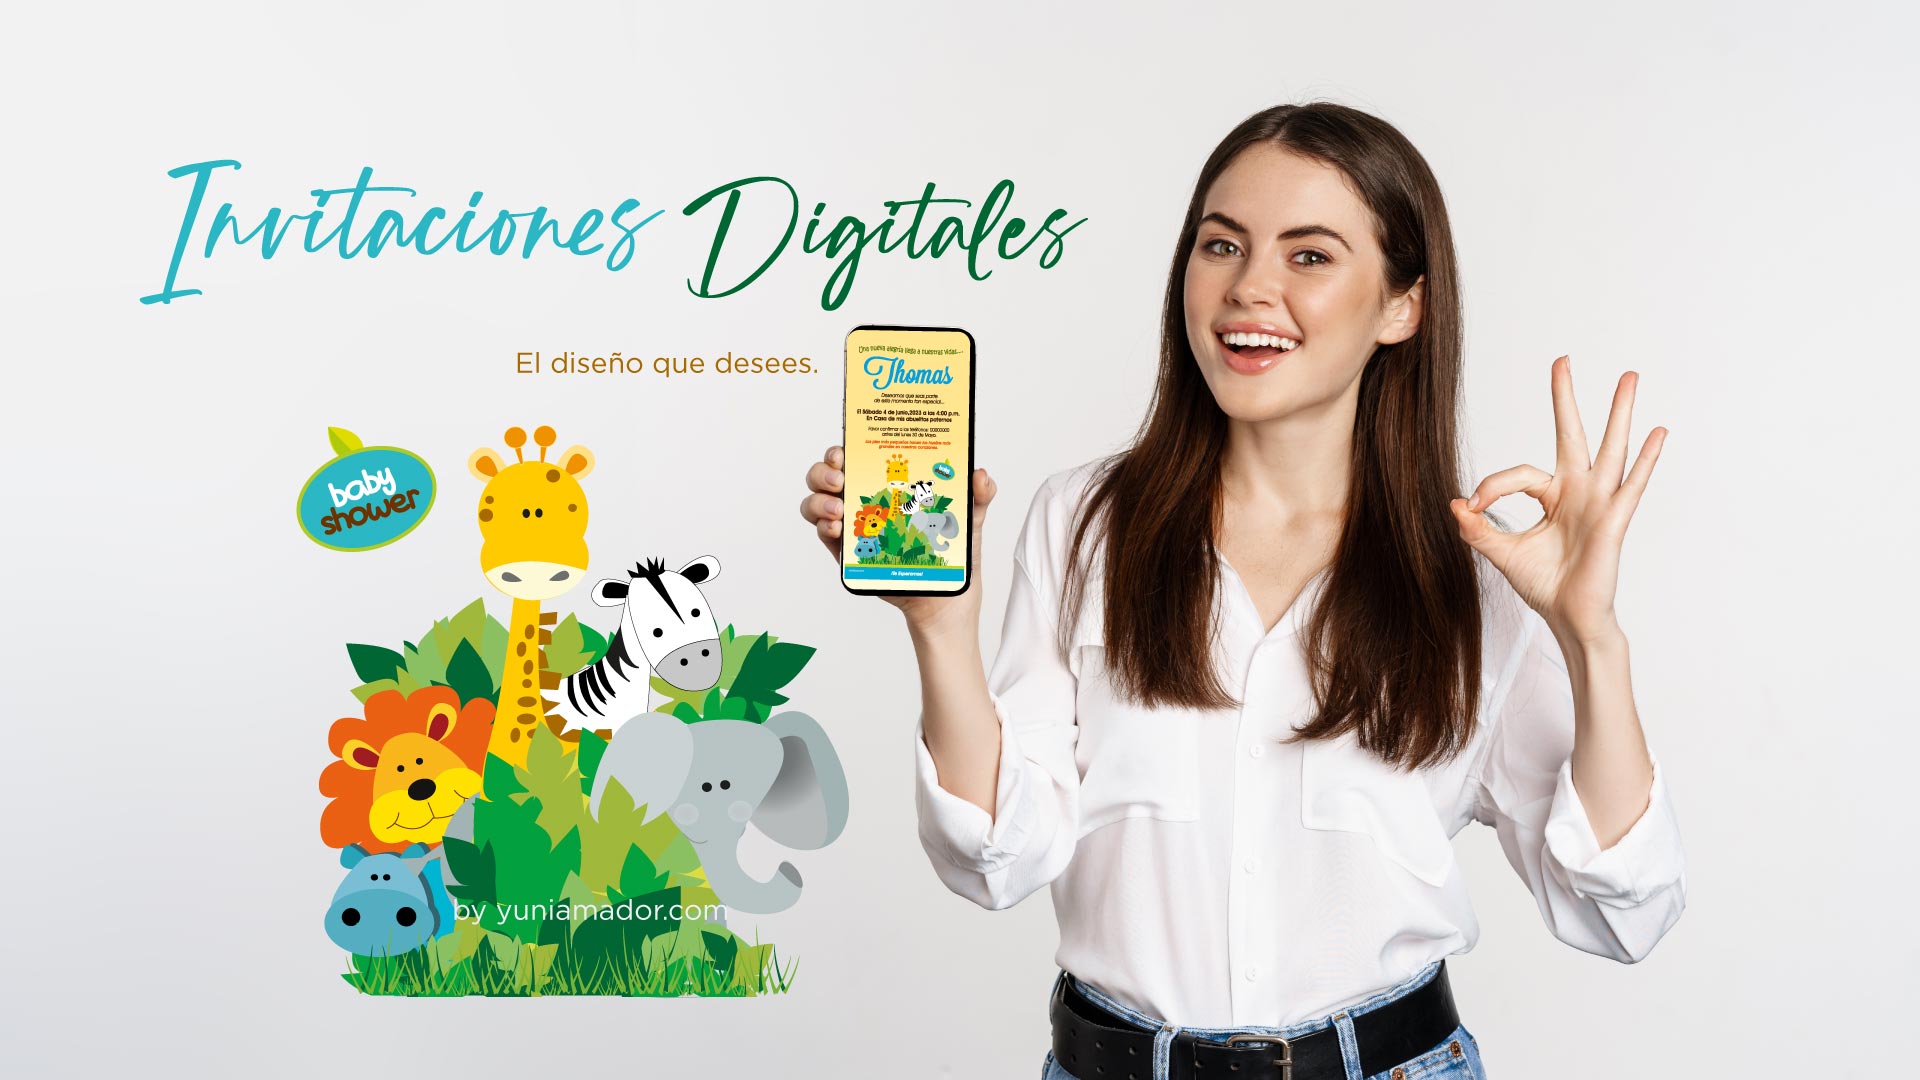 Invitaciones Digitales Costa Rica